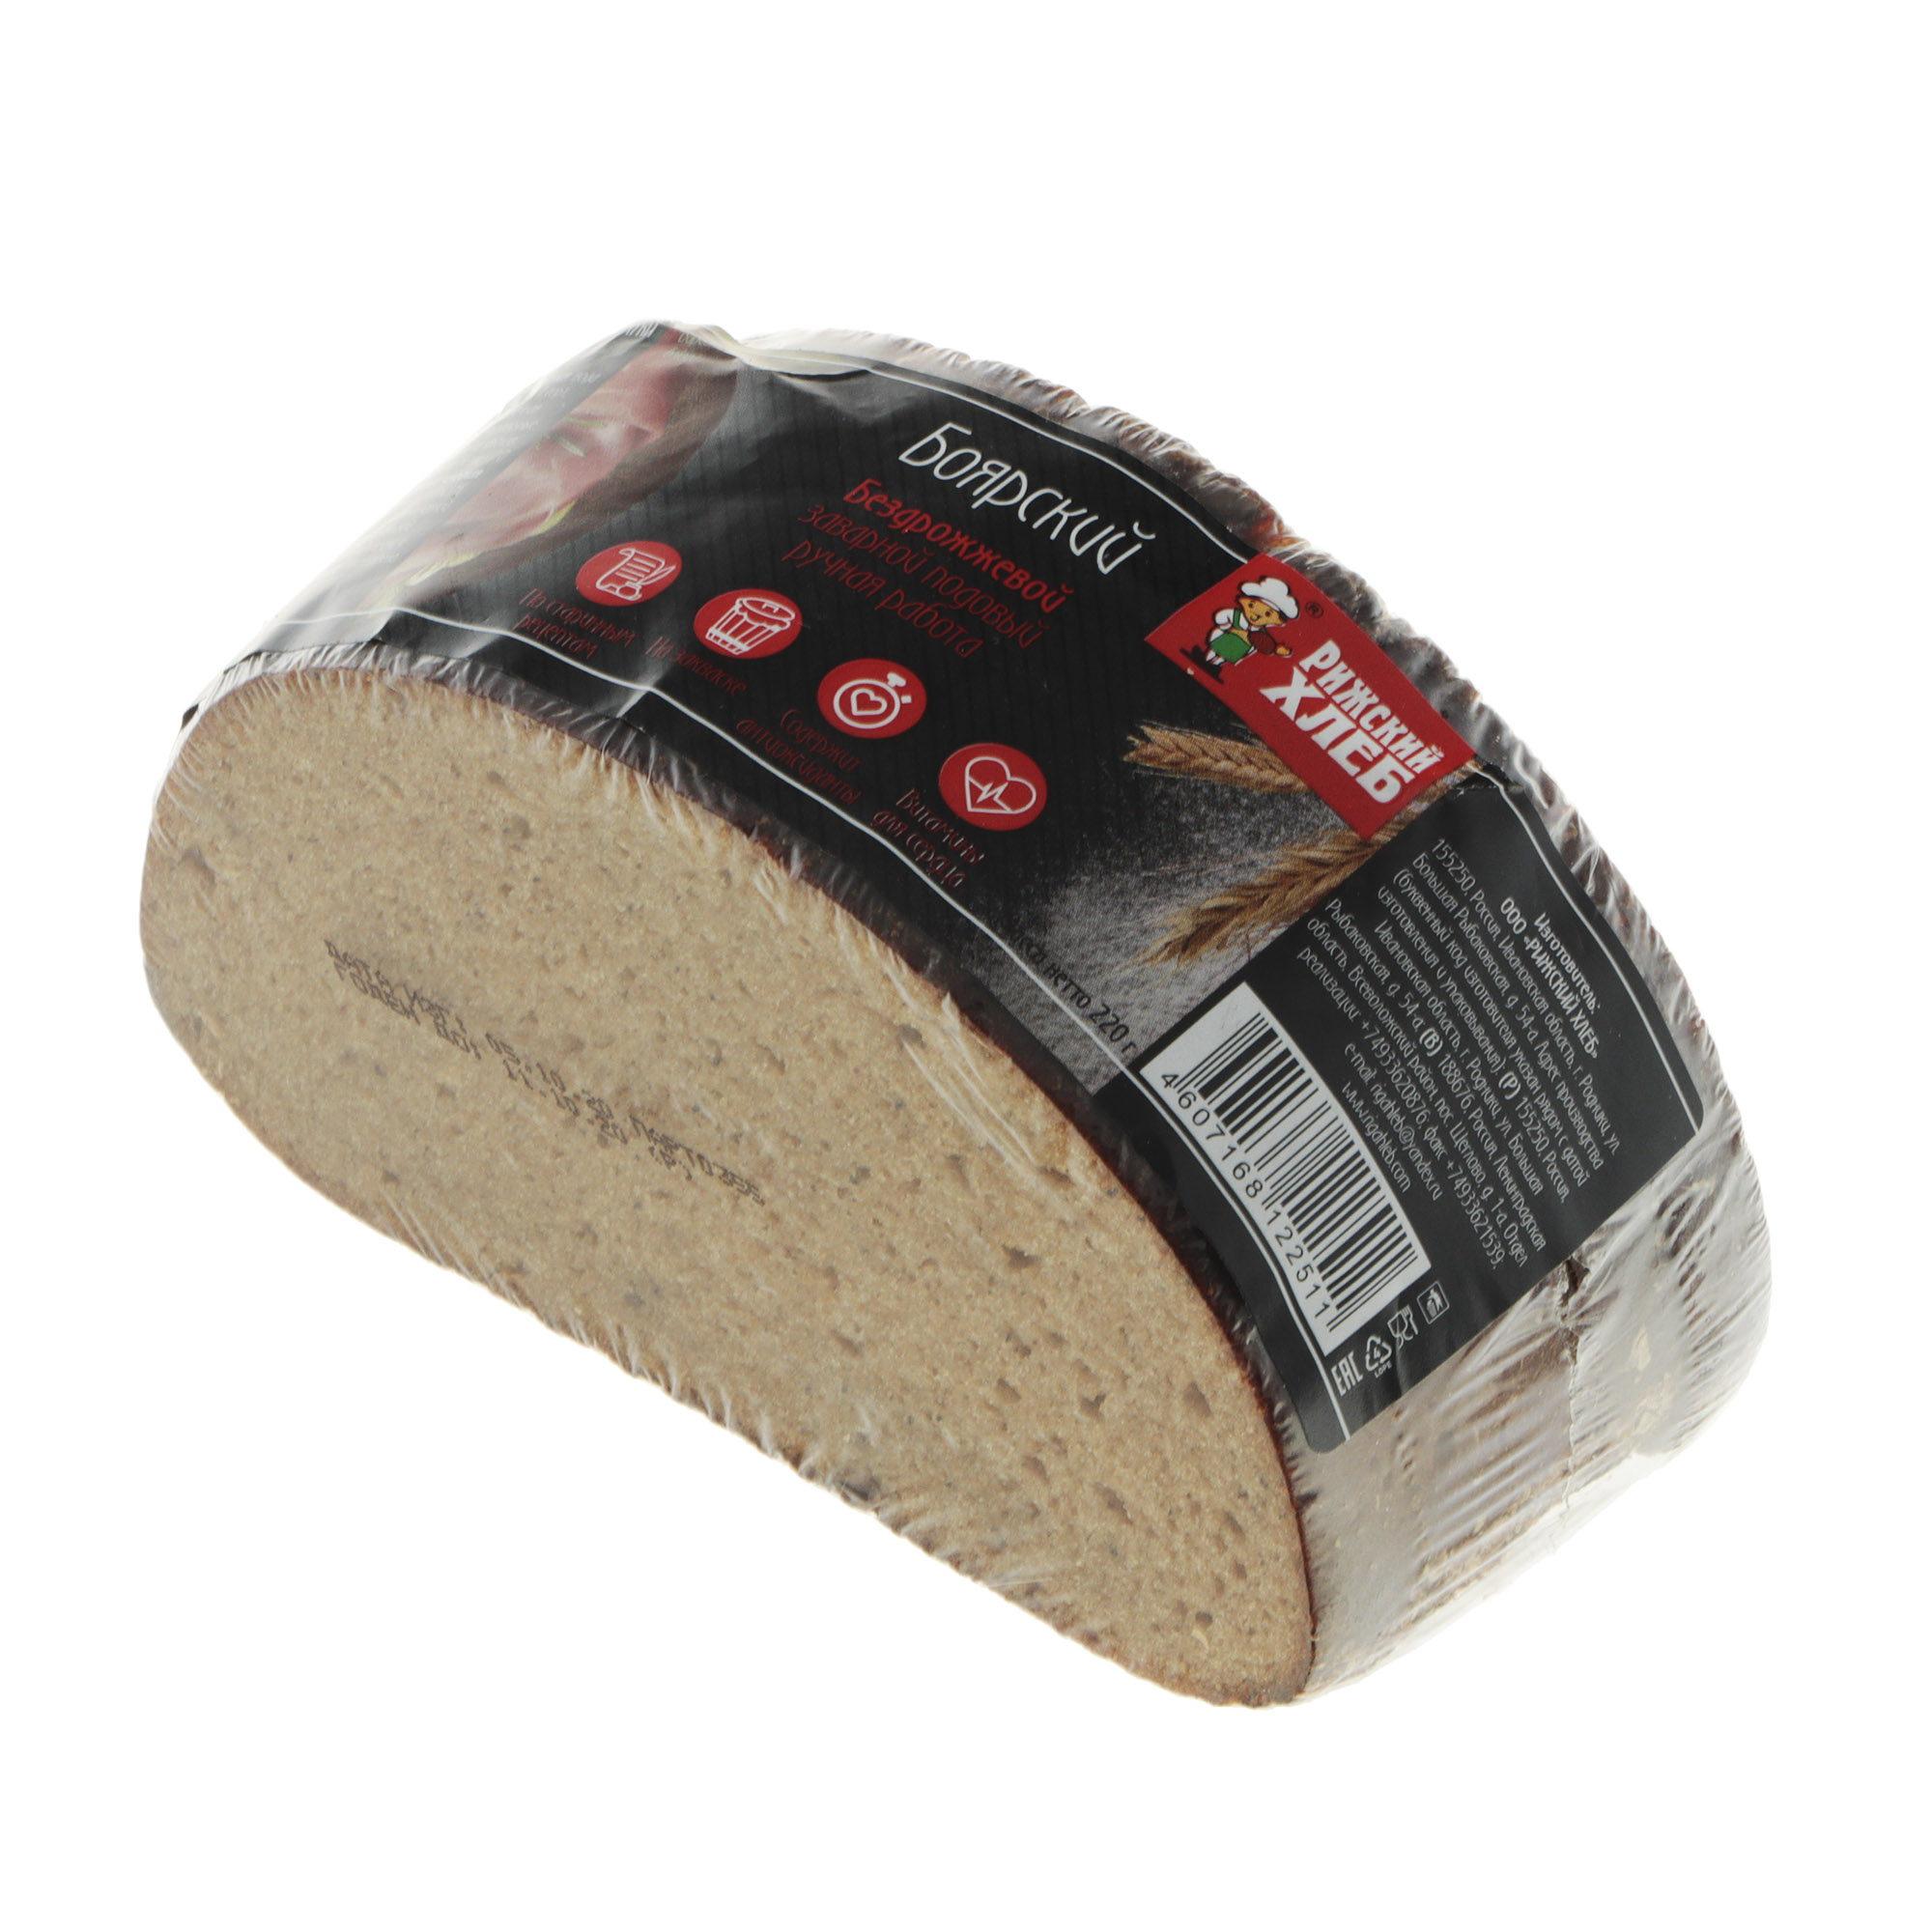 Хлеб Рижский хлеб боярский 220 г хлеб рижский хлеб боярский 220 г